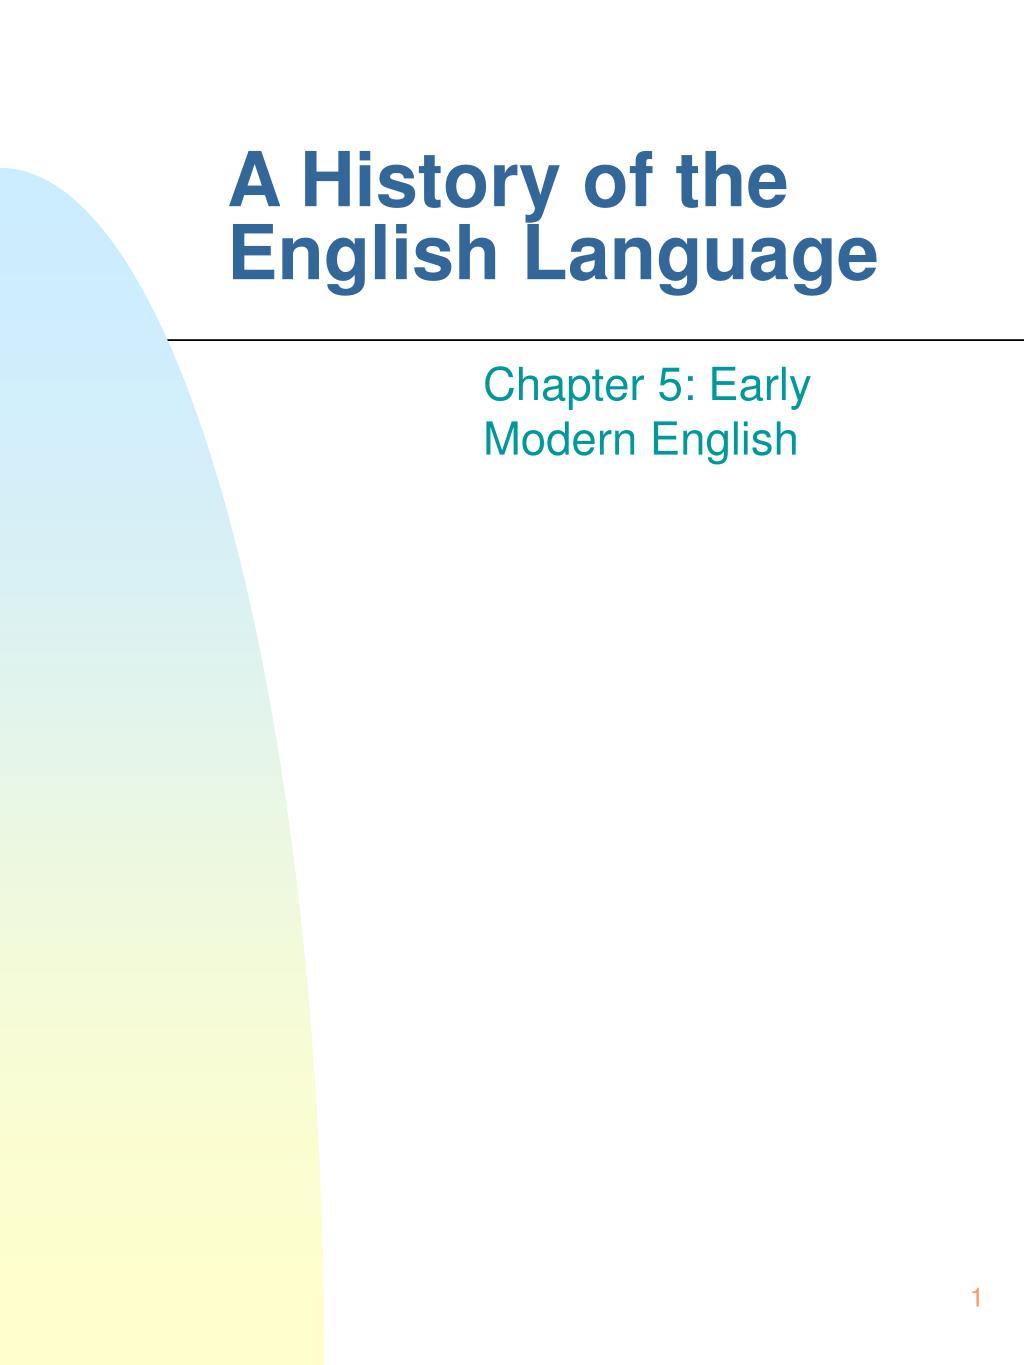 How to buy an english language powerpoint presentation British 20 days A4 (British/European)